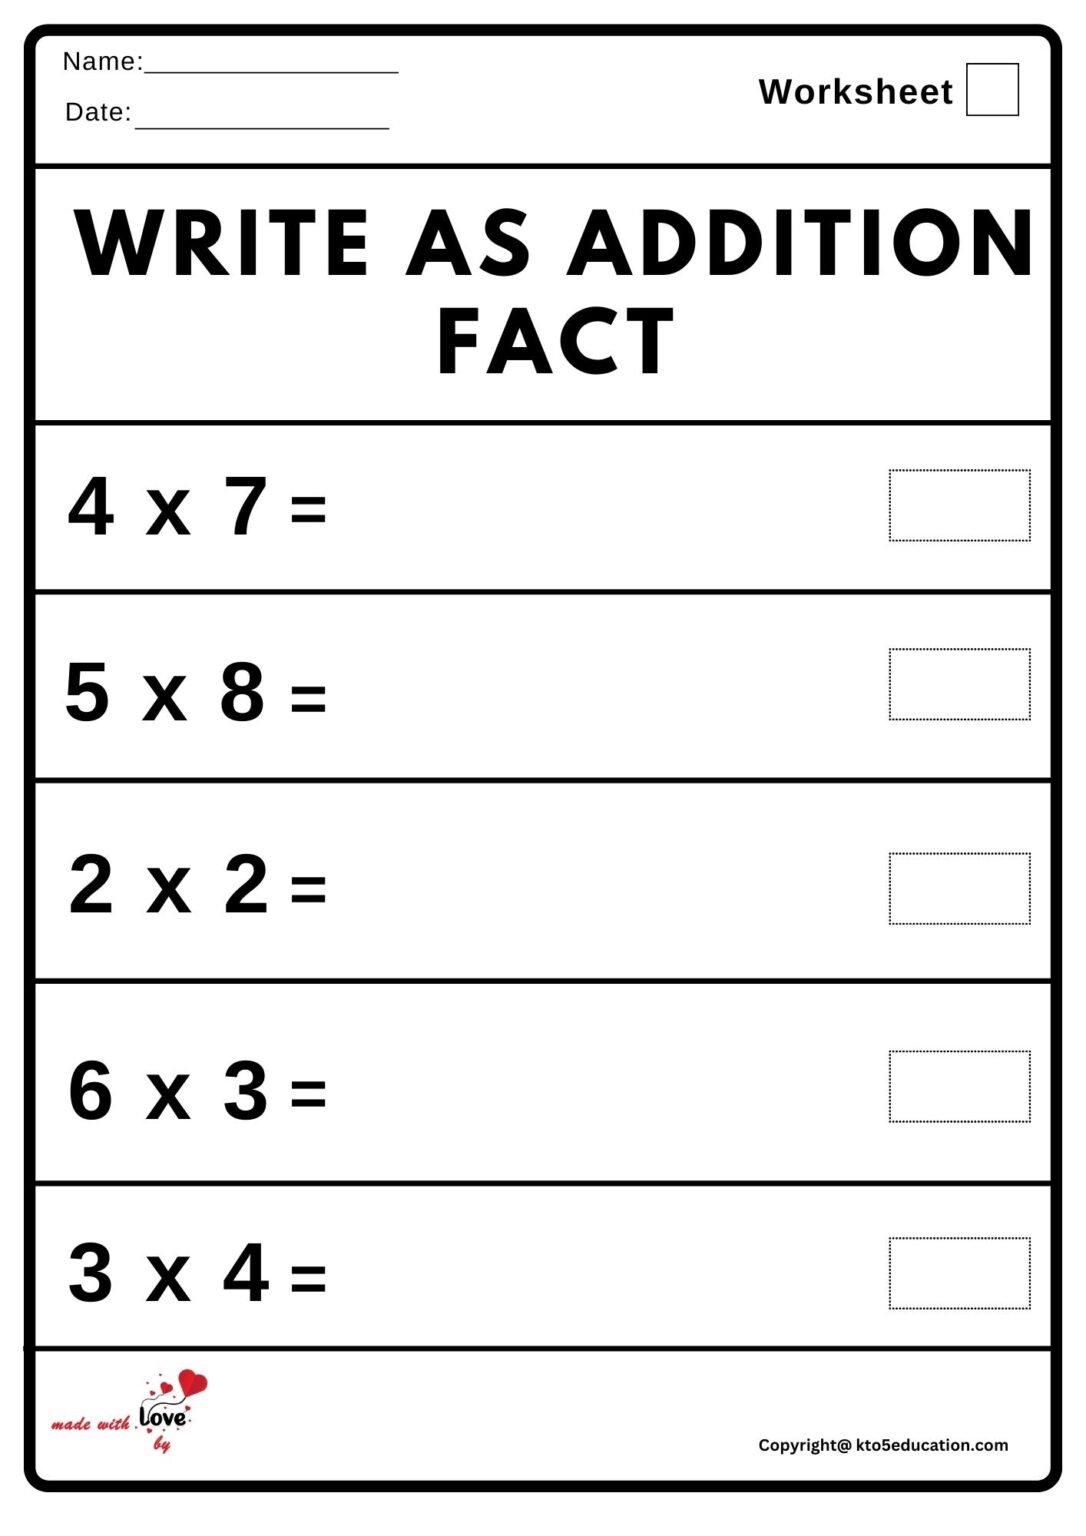 Write As Addition Fact Worksheet 2 FREE Download